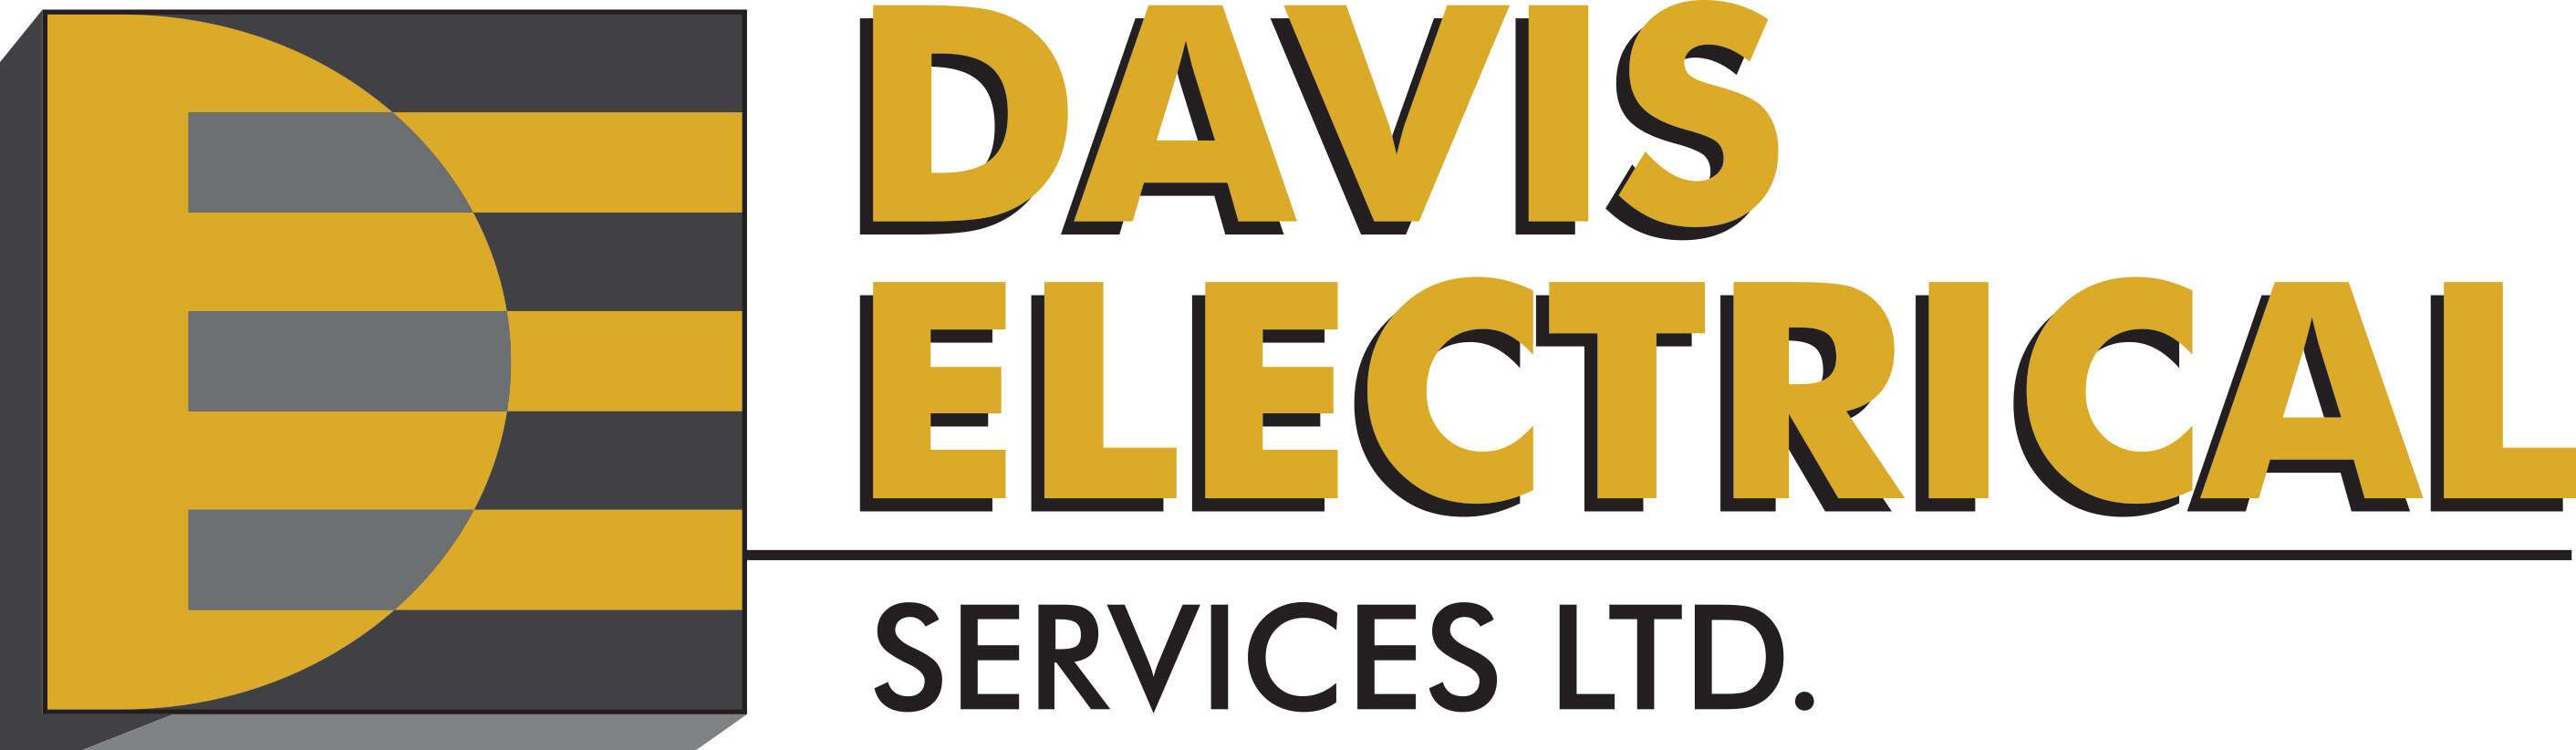 Davis Electrical Services